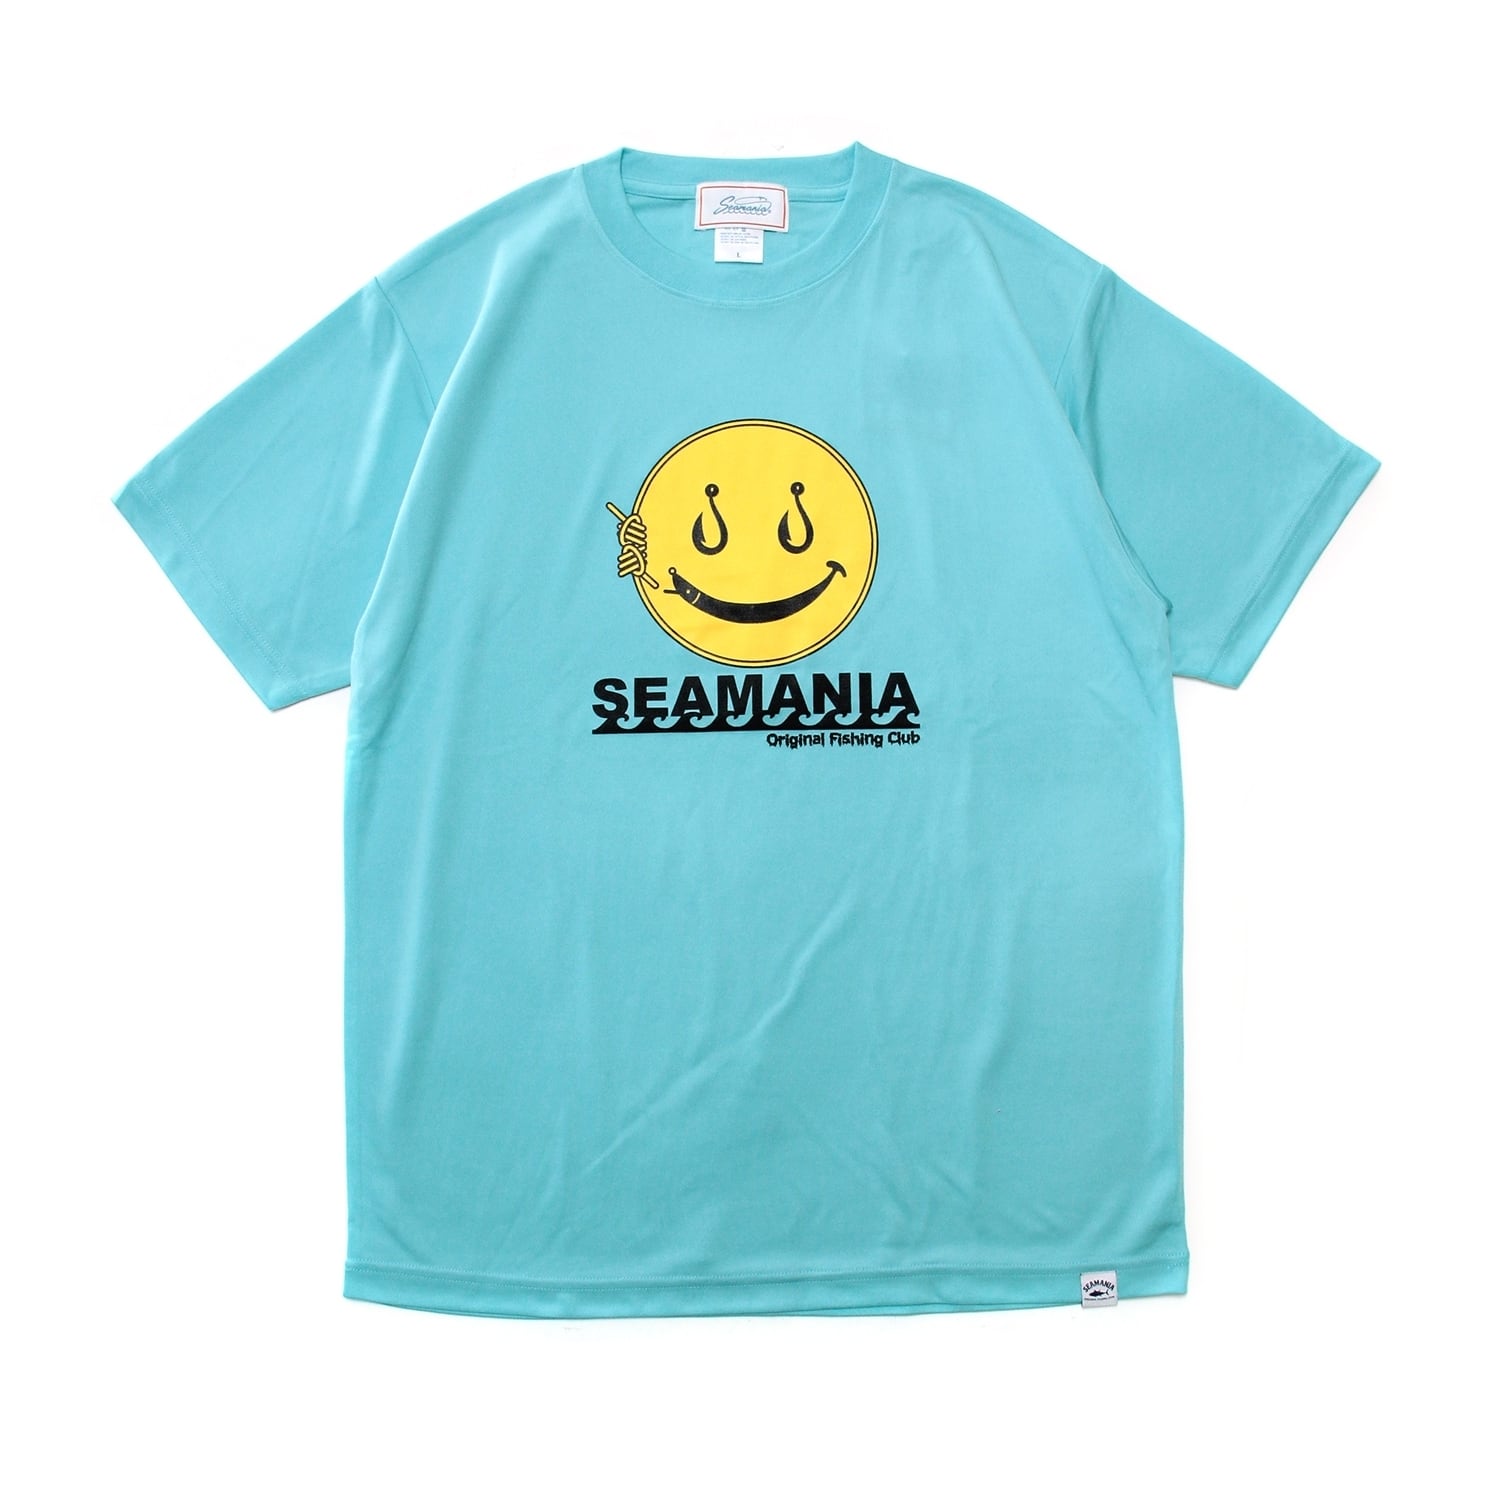 【Seamania】スマイルデザインdryTシャツ [AQUA]